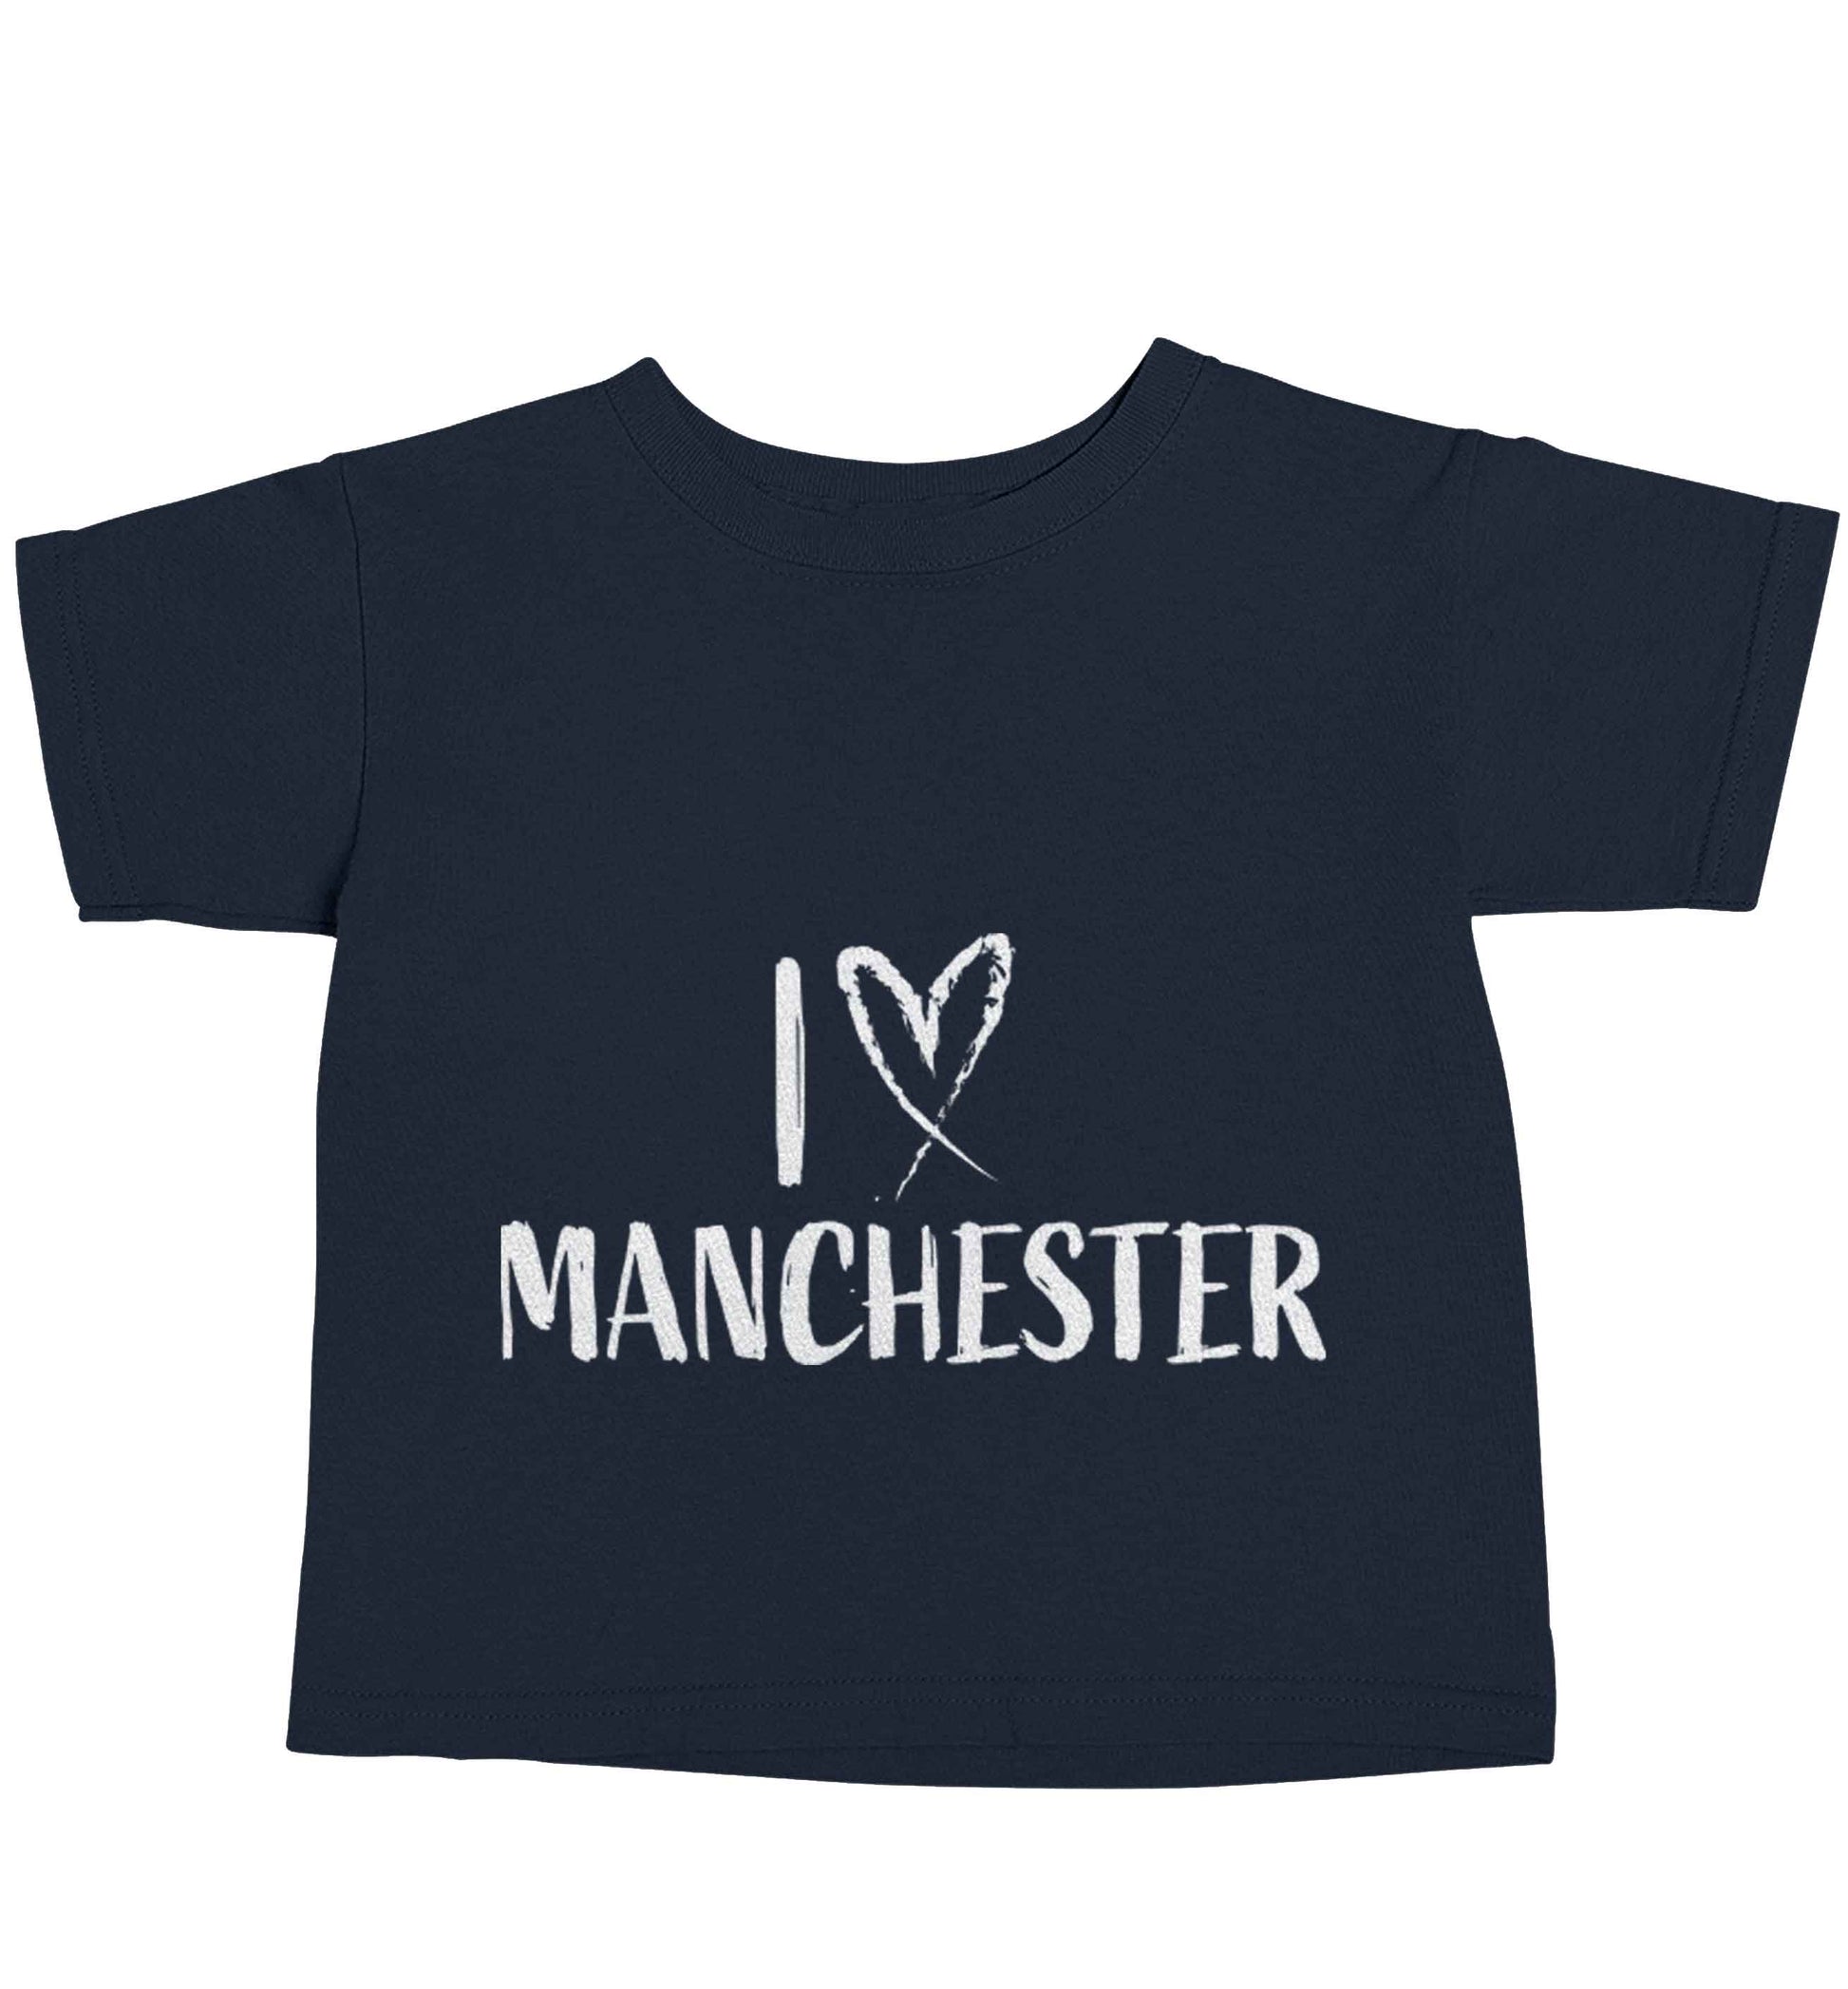 I love Manchester navy baby toddler Tshirt 2 Years